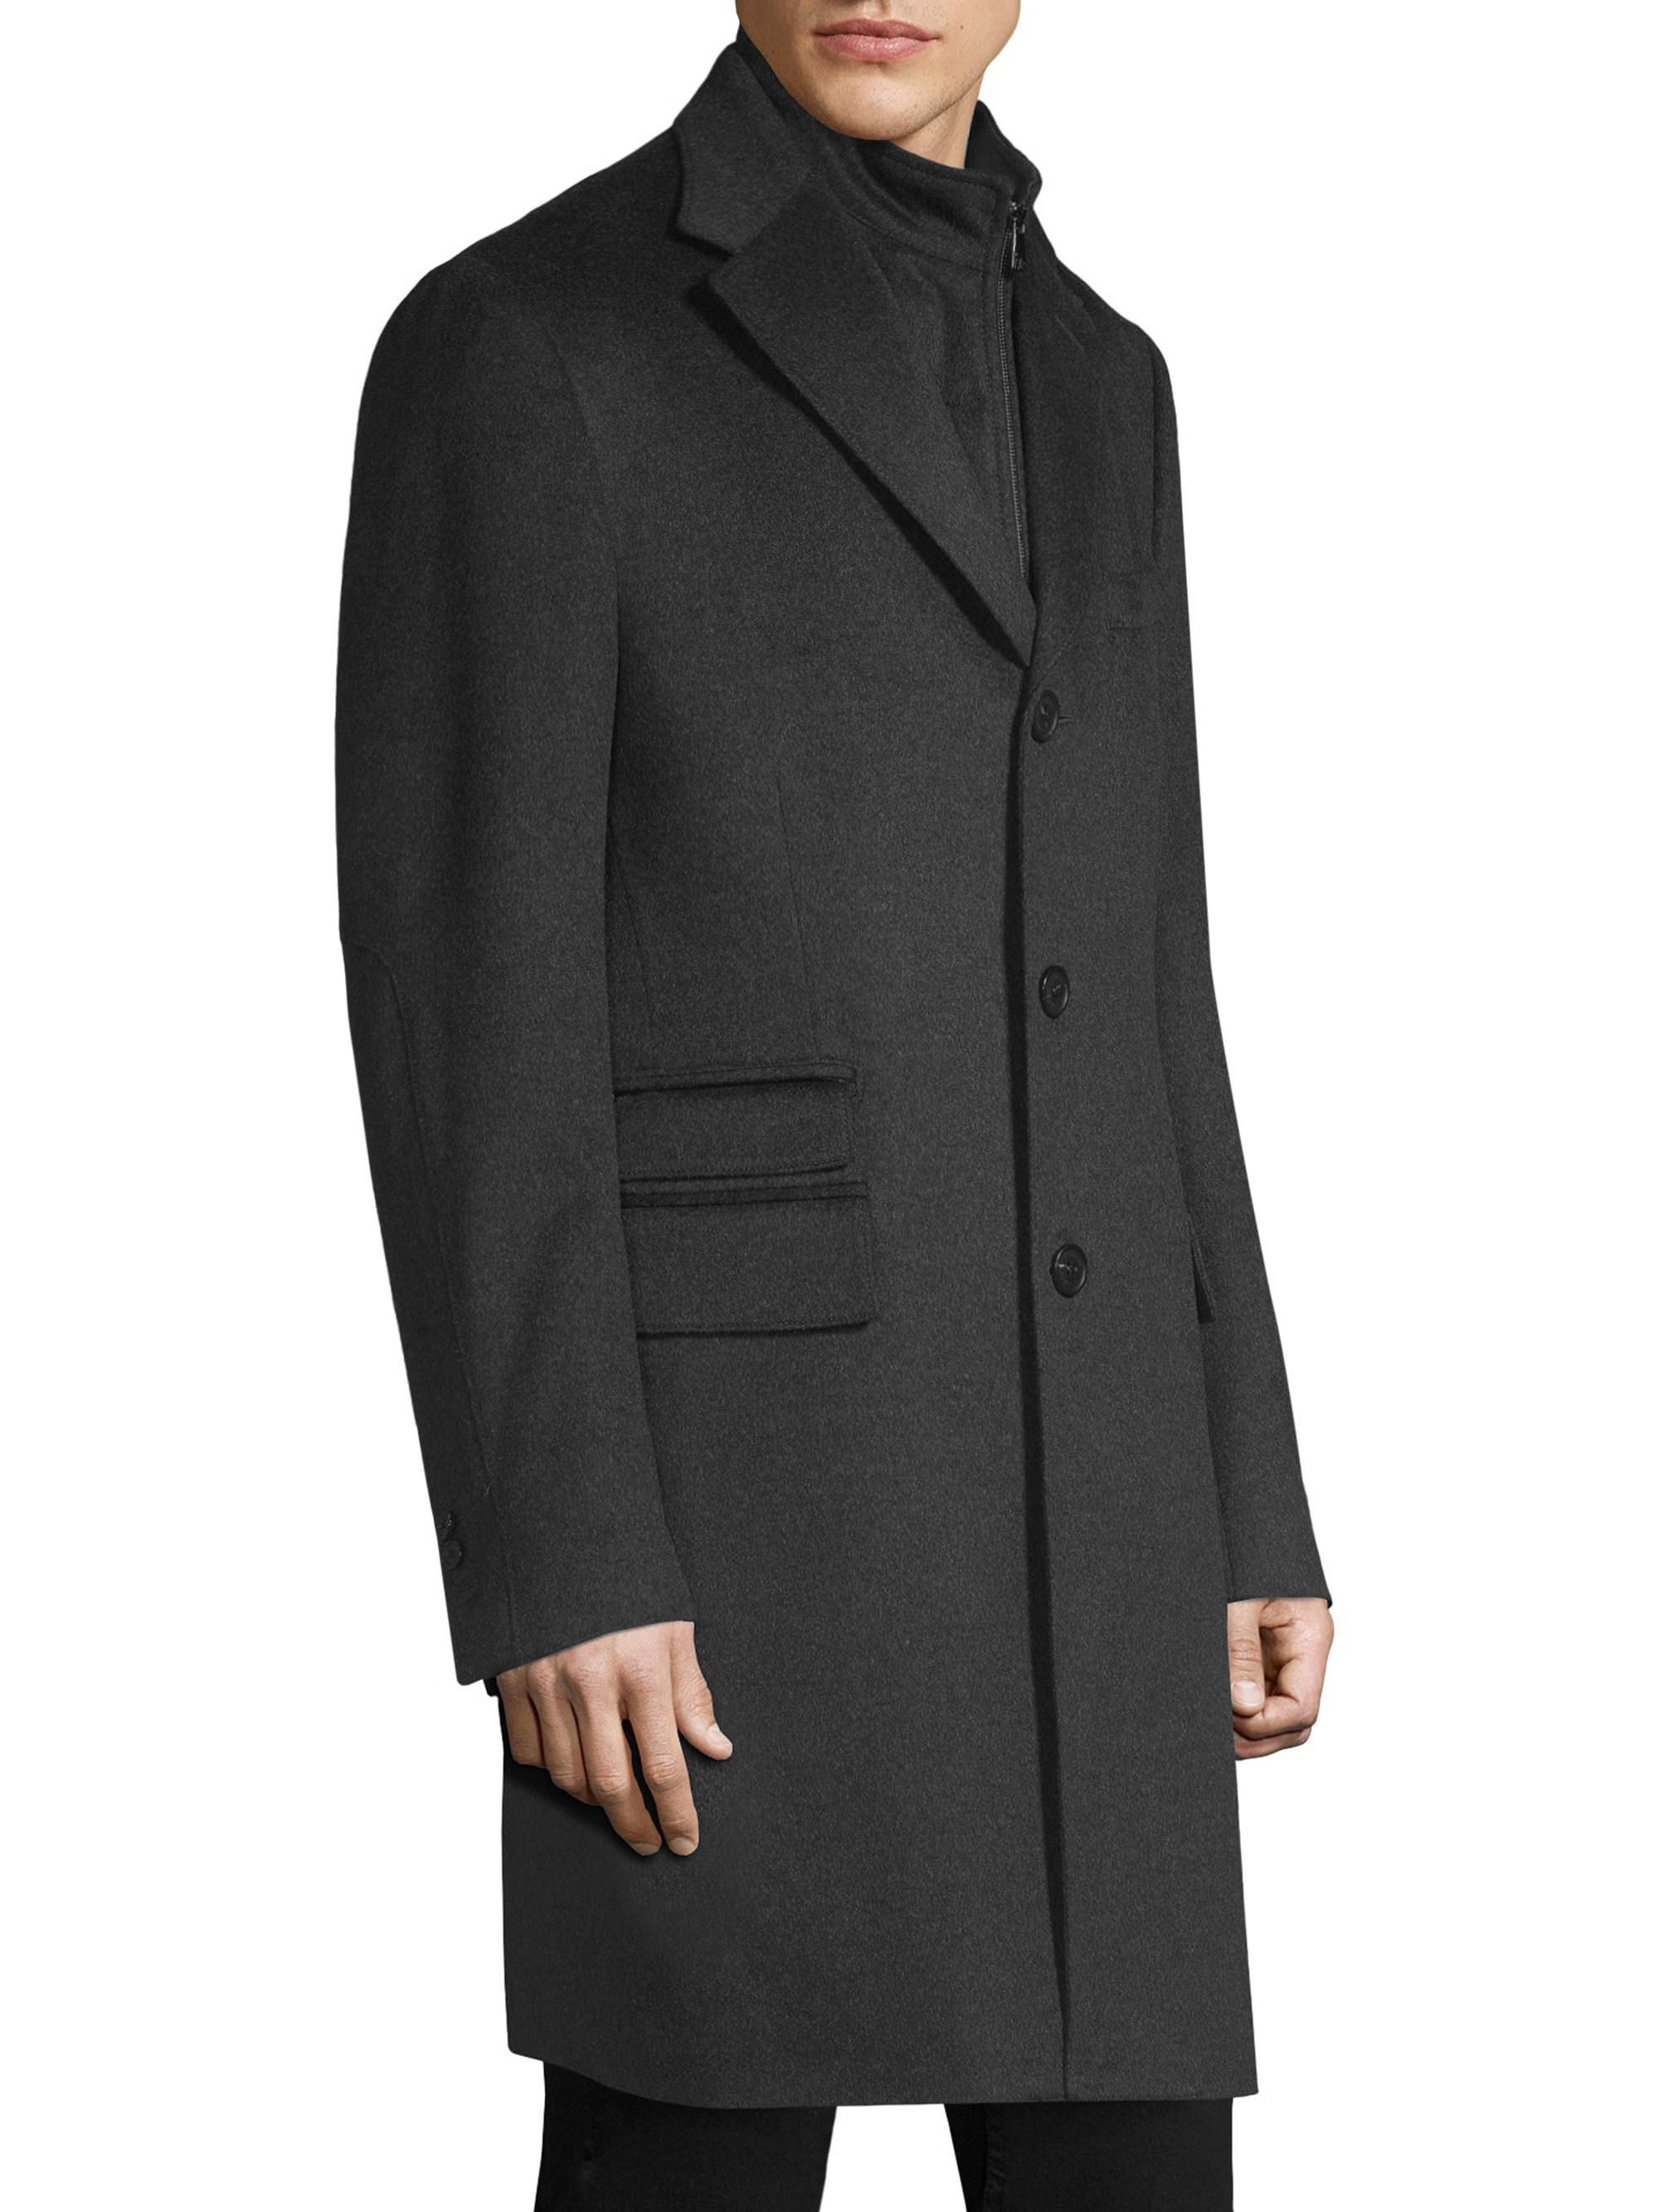 Corneliani Tailored Wool Topcoat in Grey (Gray) for Men - Lyst